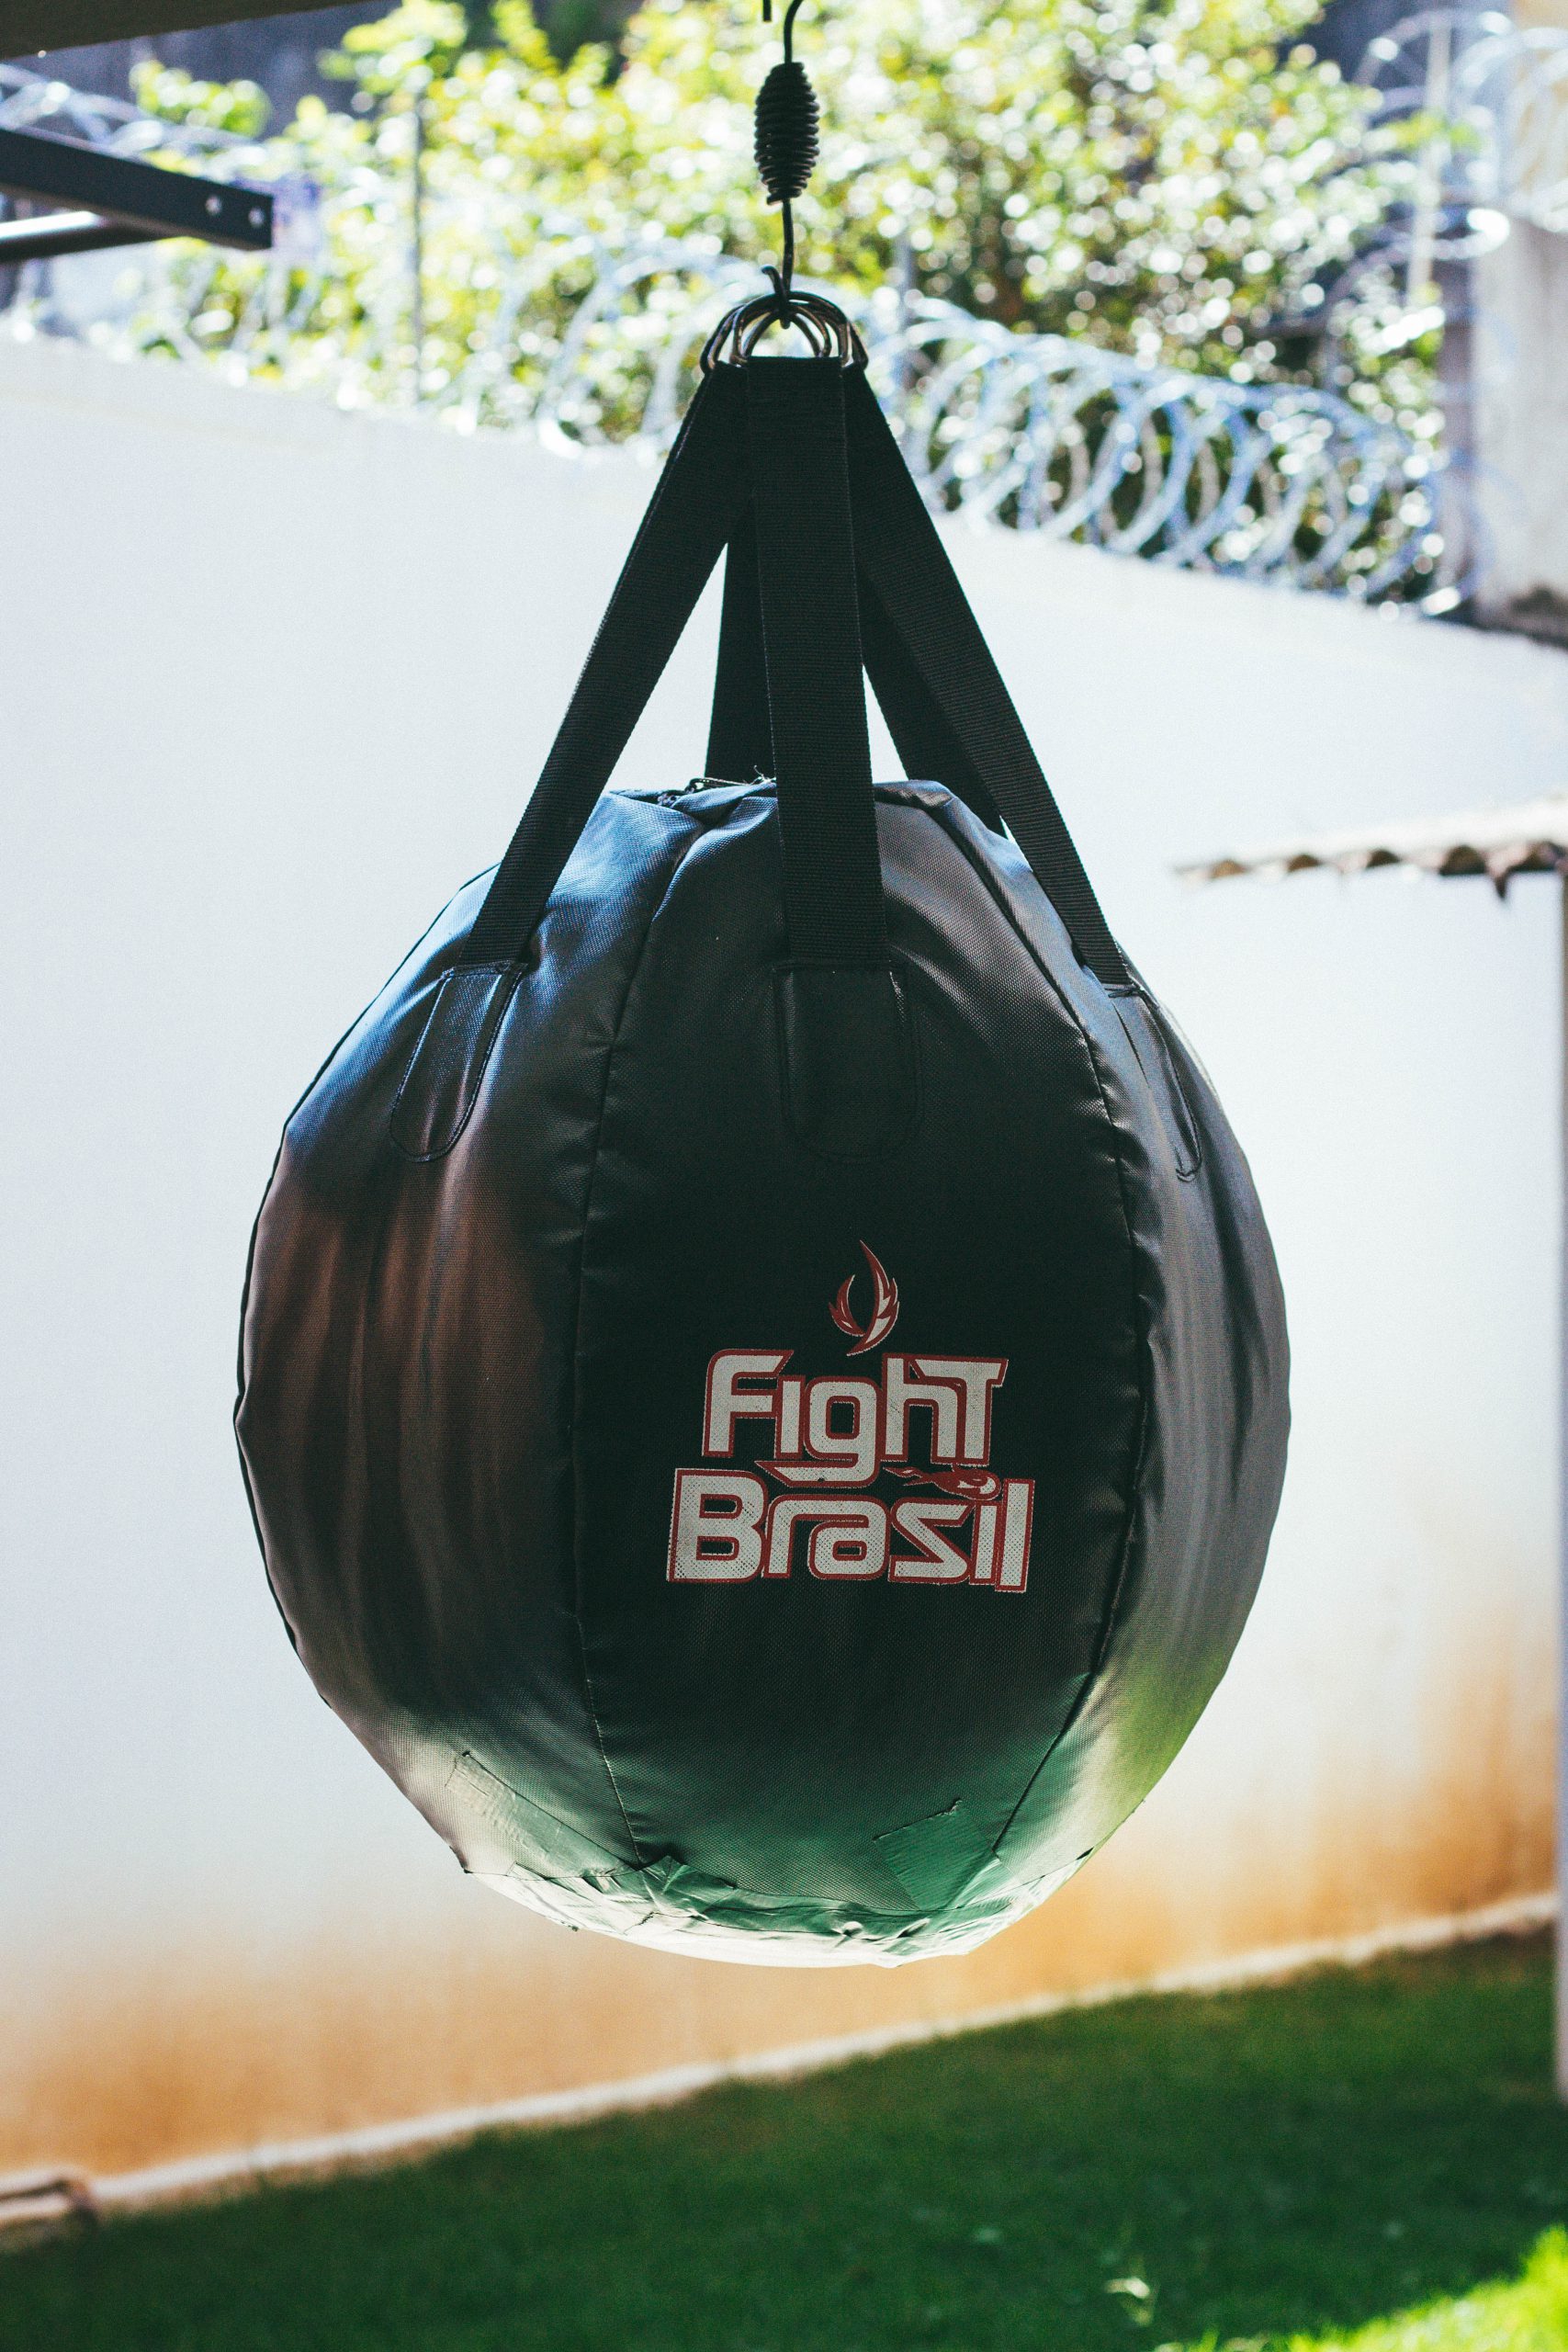 Boxing Training Lab – Aprenda Boxe através de uma metodologia